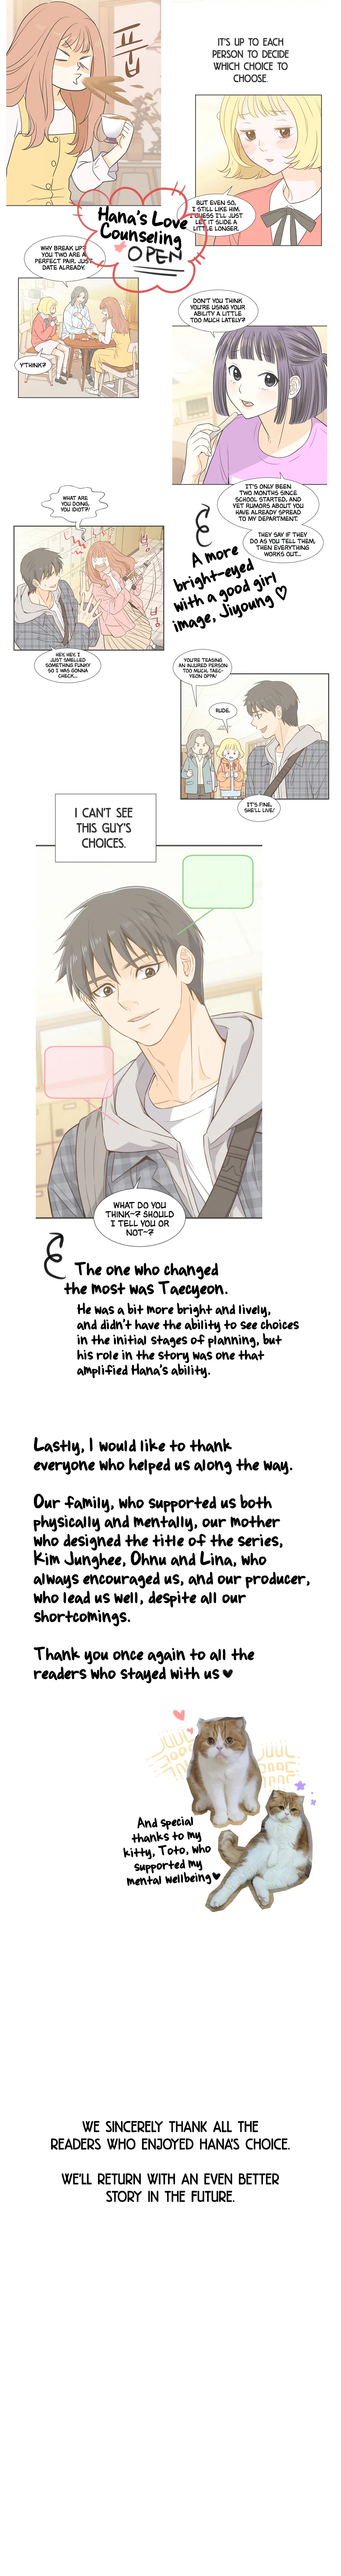 Hana’S Choice - Page 2